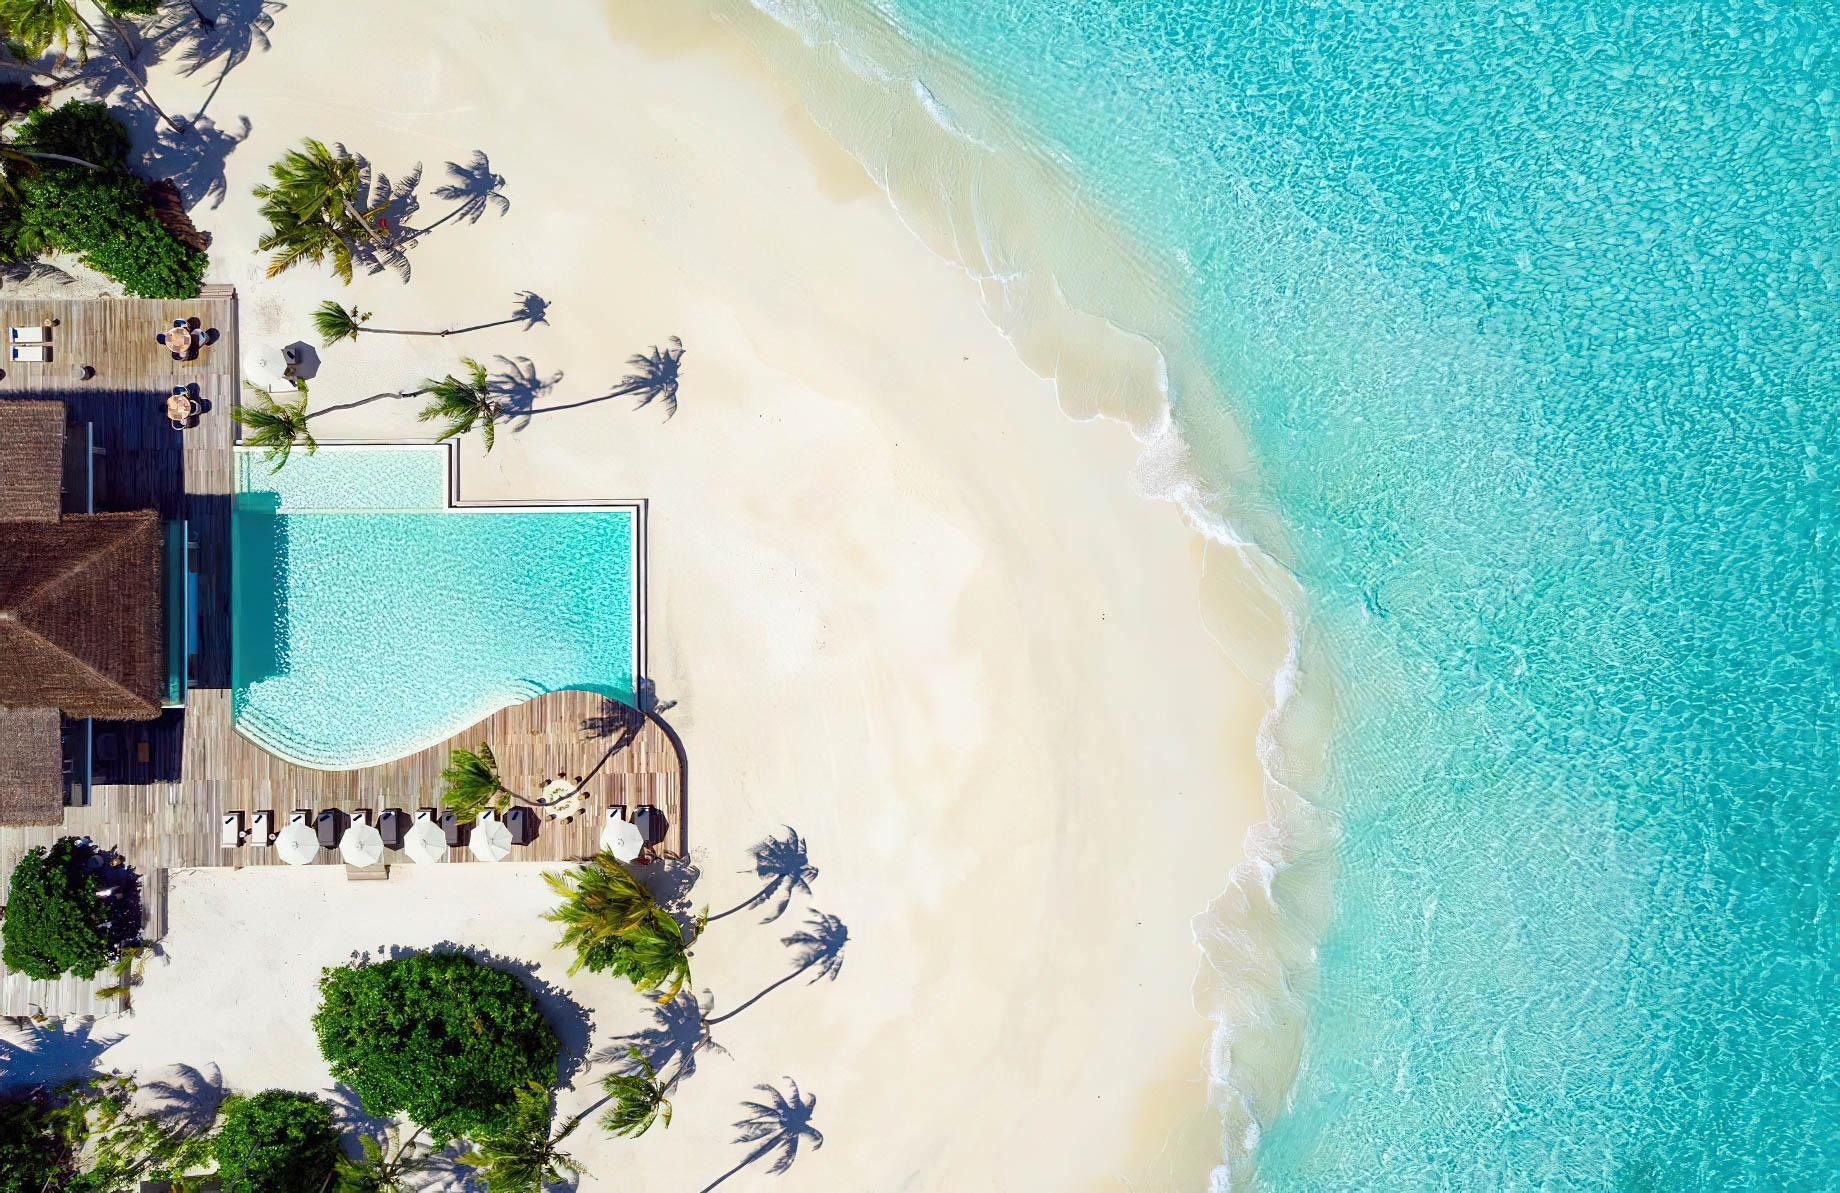 Baglioni Resort Maldives – Maagau Island, Rinbudhoo, Maldives – Resort Main Pool Overhead Aerial View